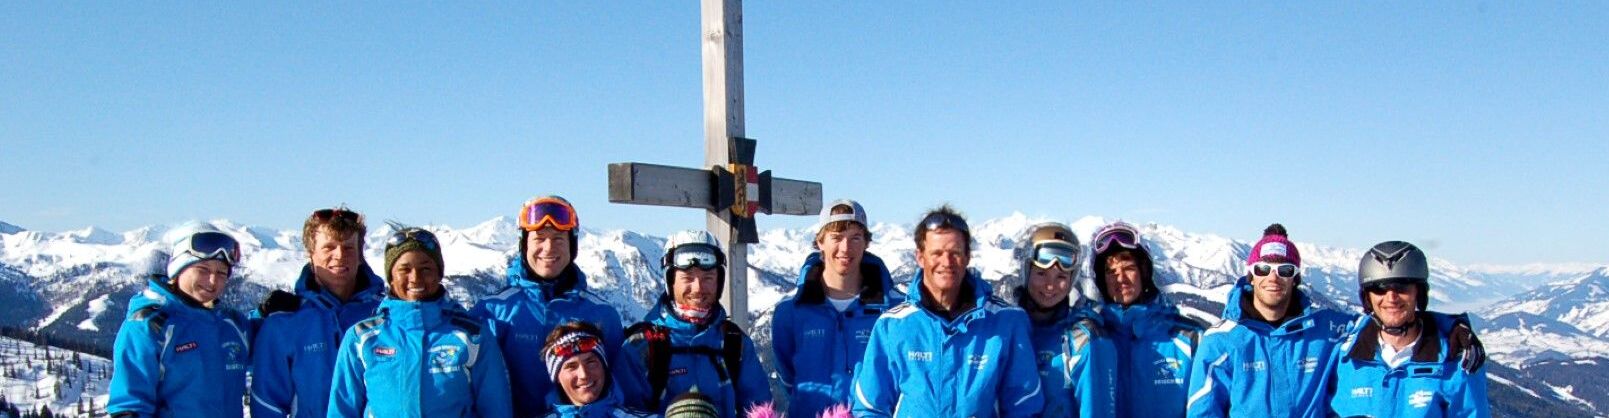 Skischool Flachau - goed opgeleide skileraren